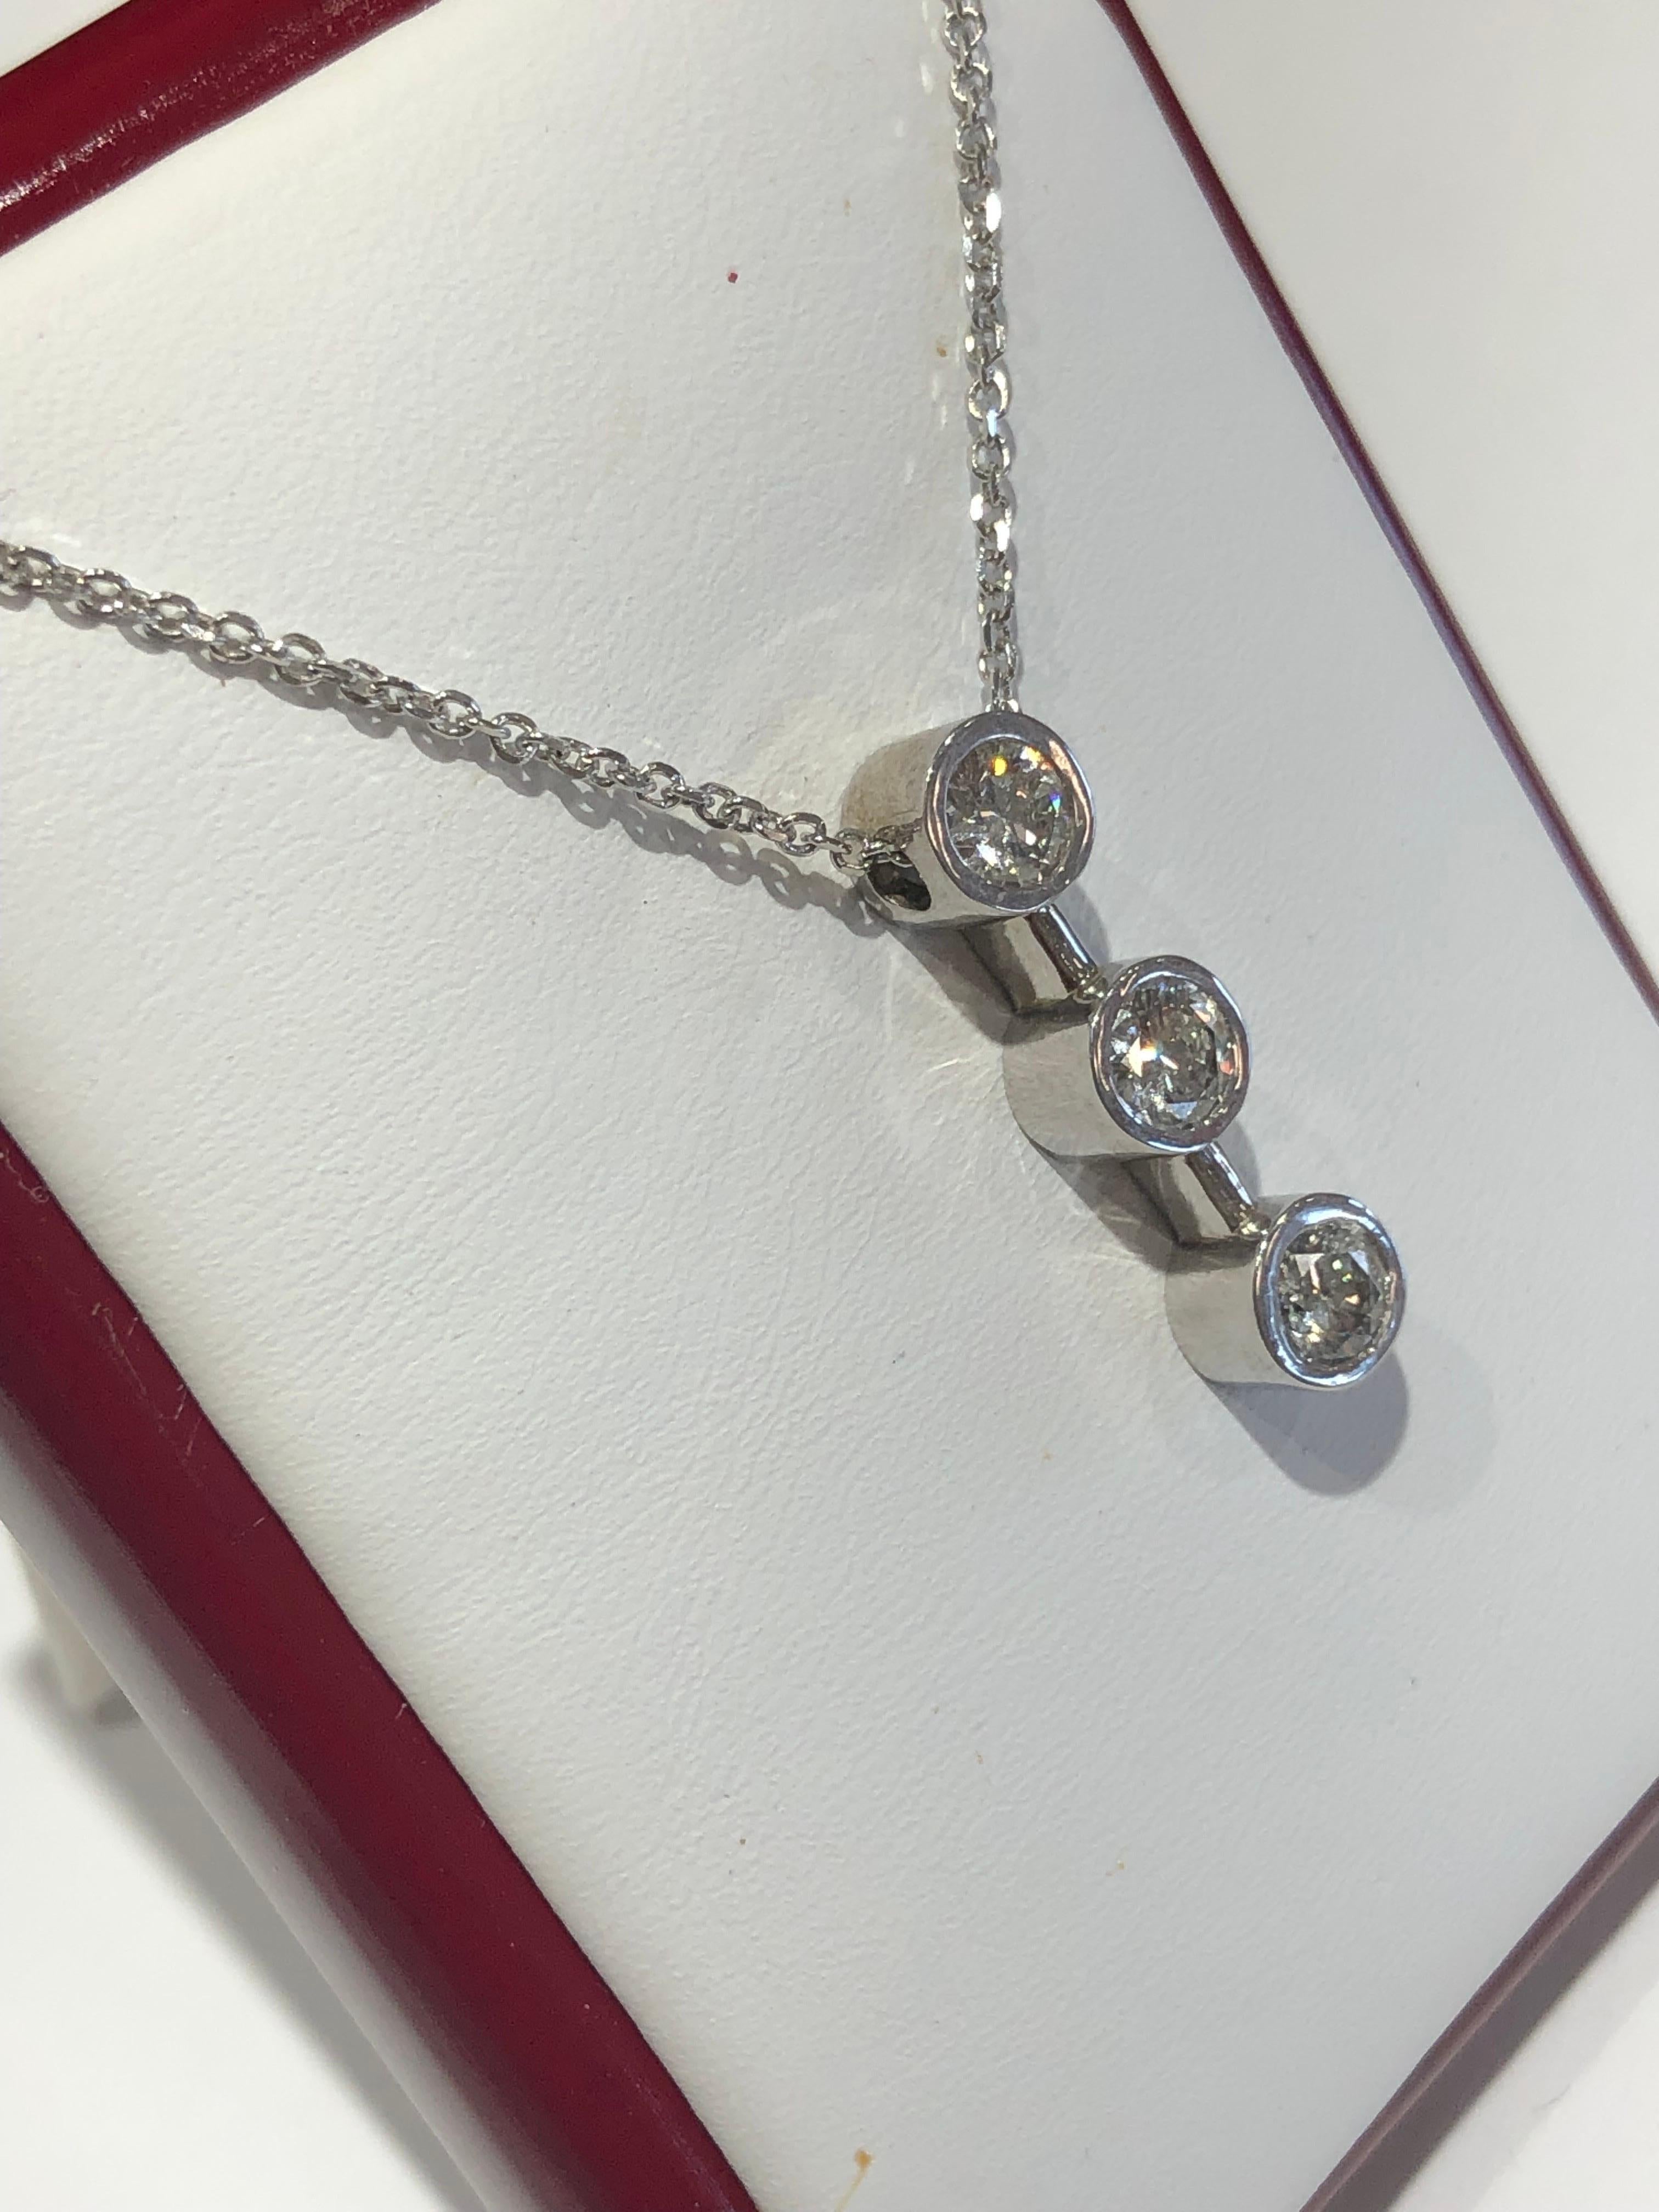 3 diamond pendant necklace